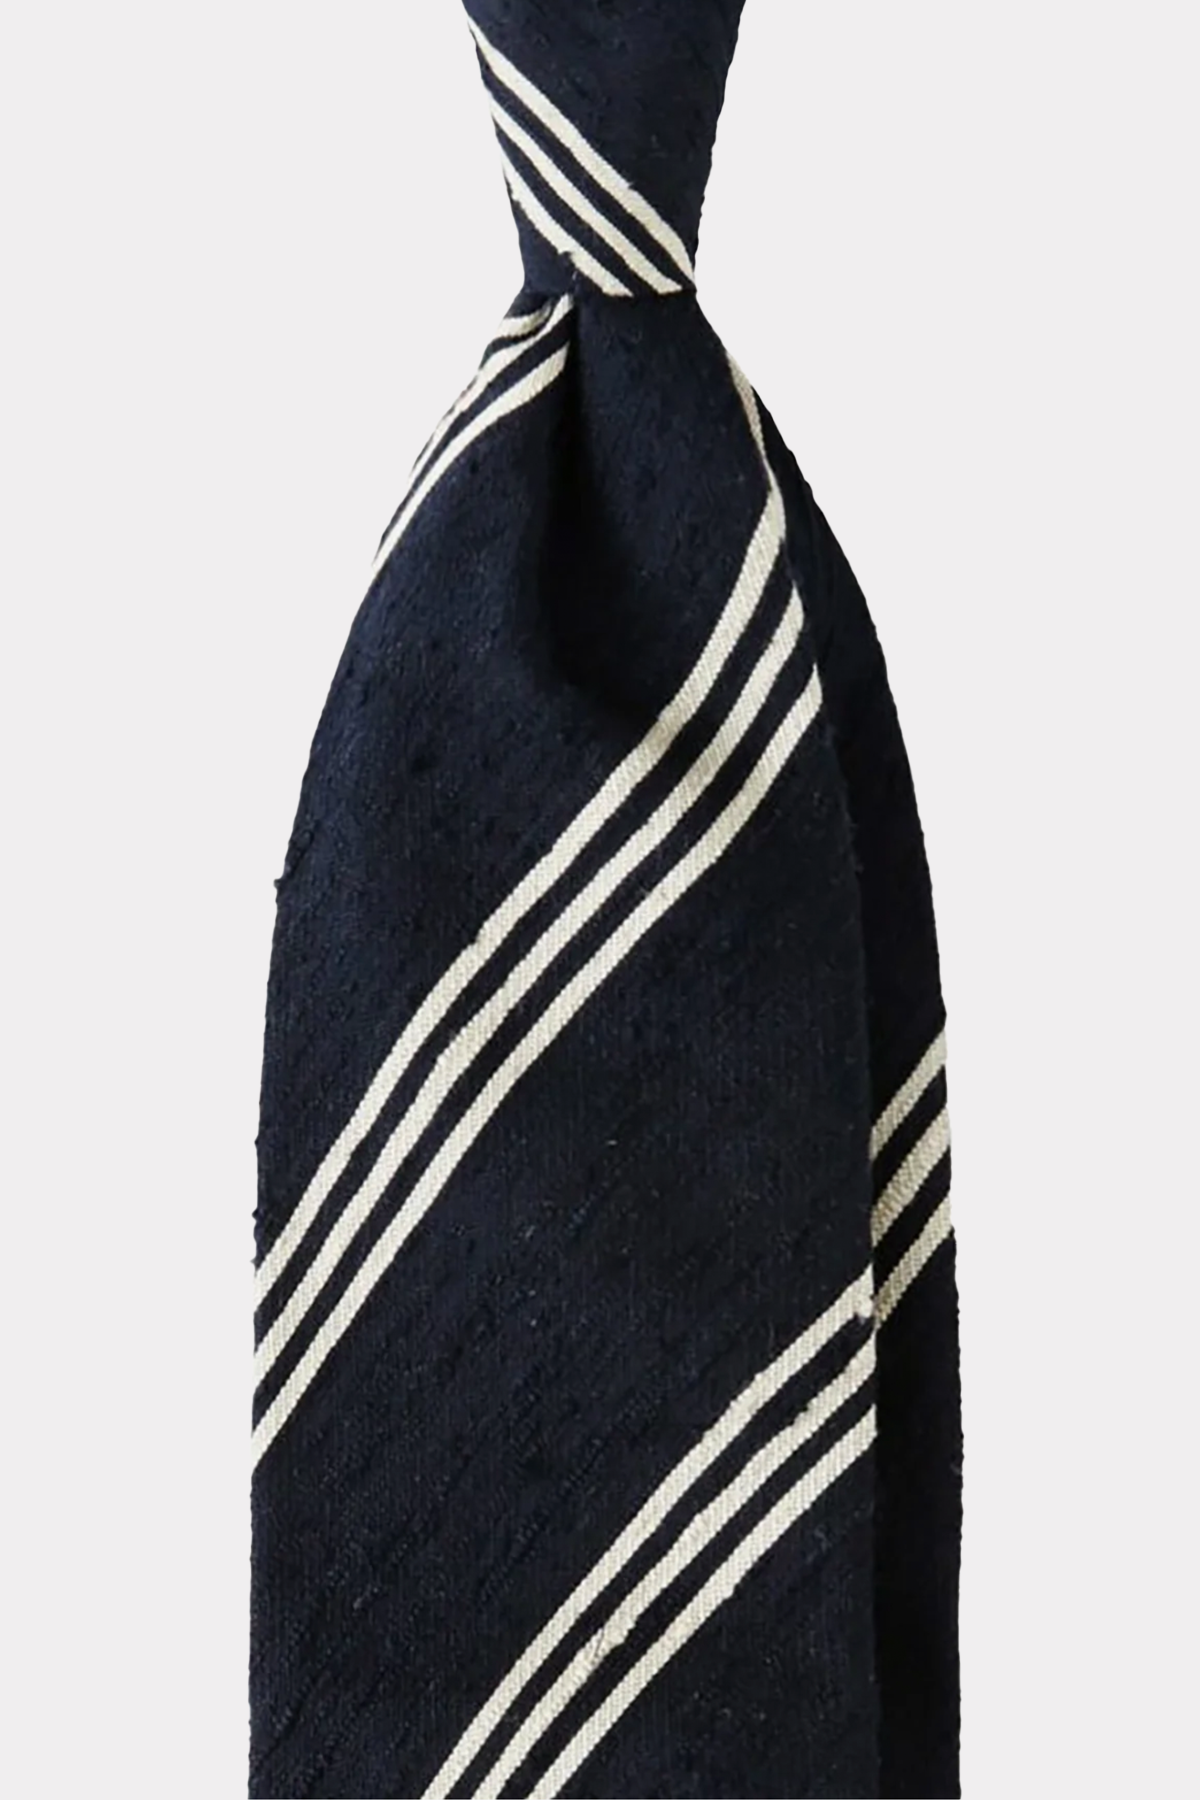 Krawatte in marine